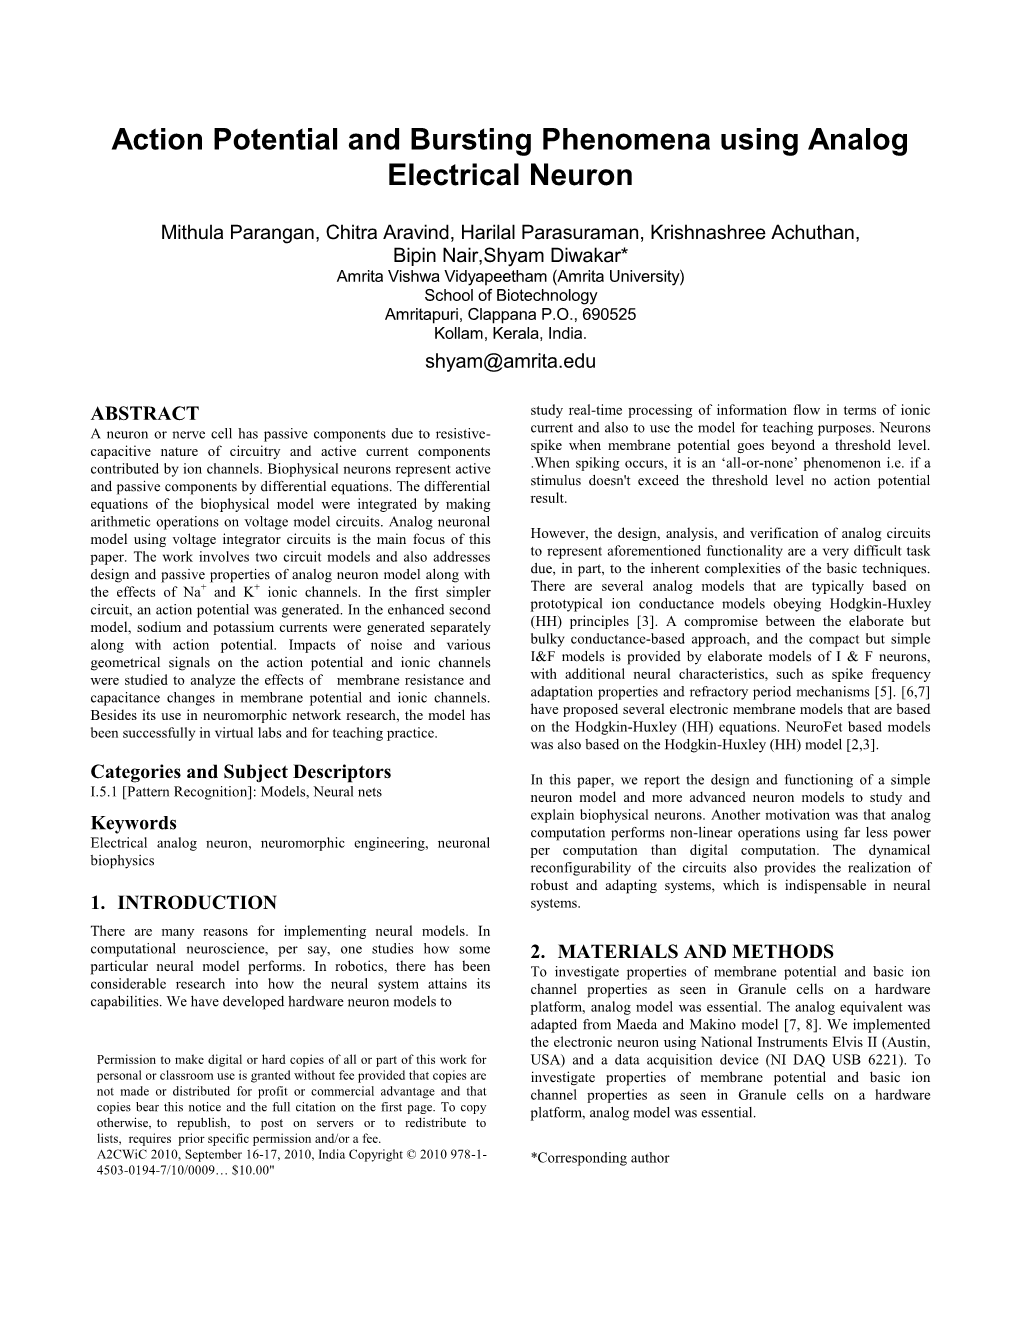 Action Potential and Bursting Phenomena Using Analog Electrical Neuron